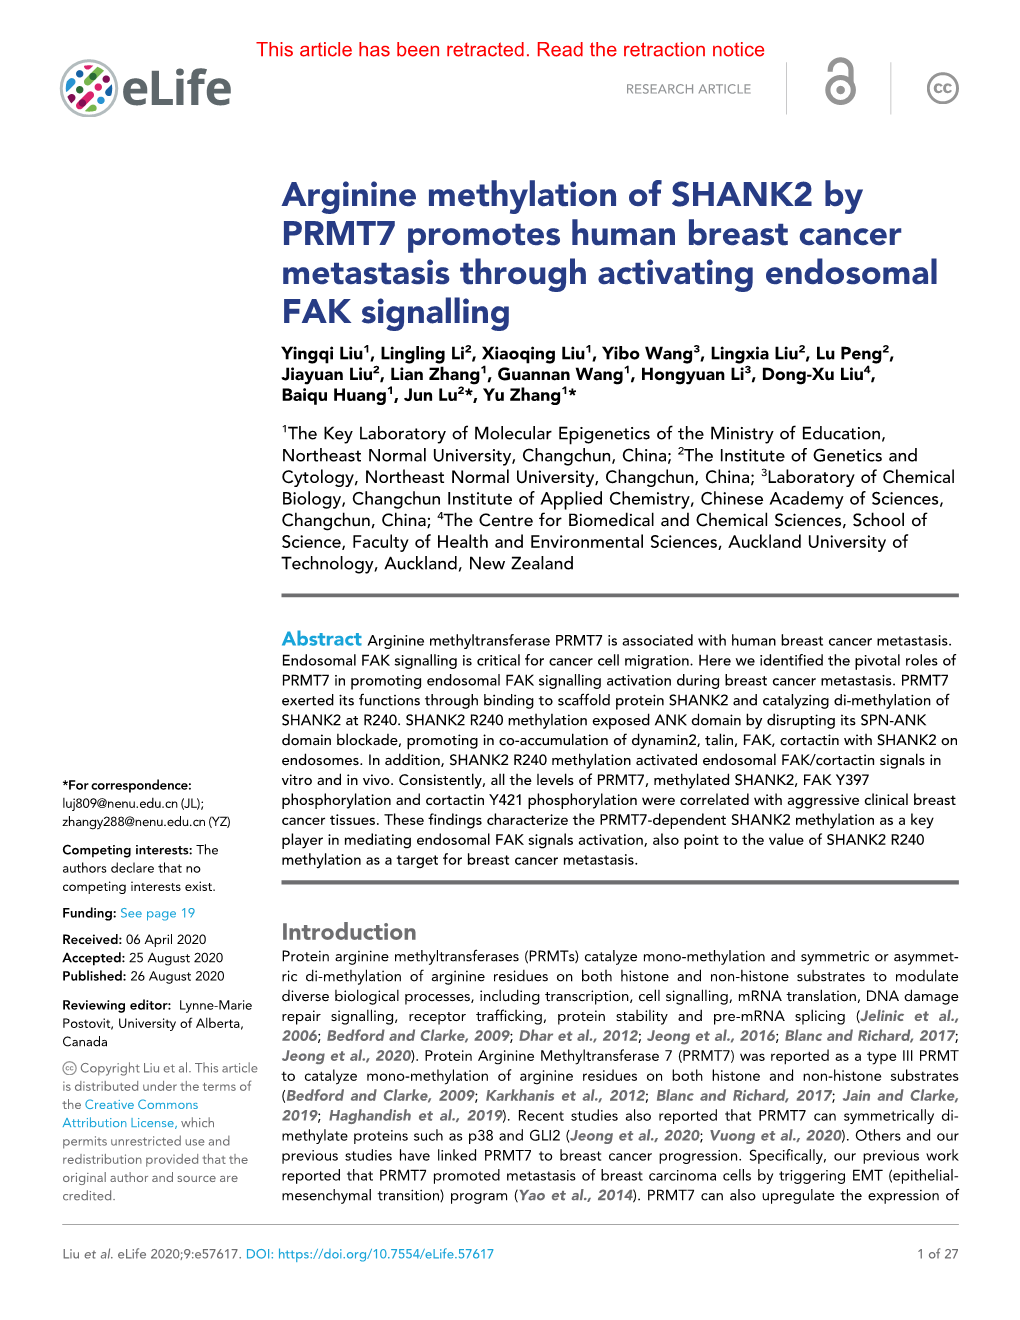 Arginine Methylation of SHANK2 by PRMT7 Promotes Human Breast Cancer Metastasis Through Activating Endosomal FAK Signalling